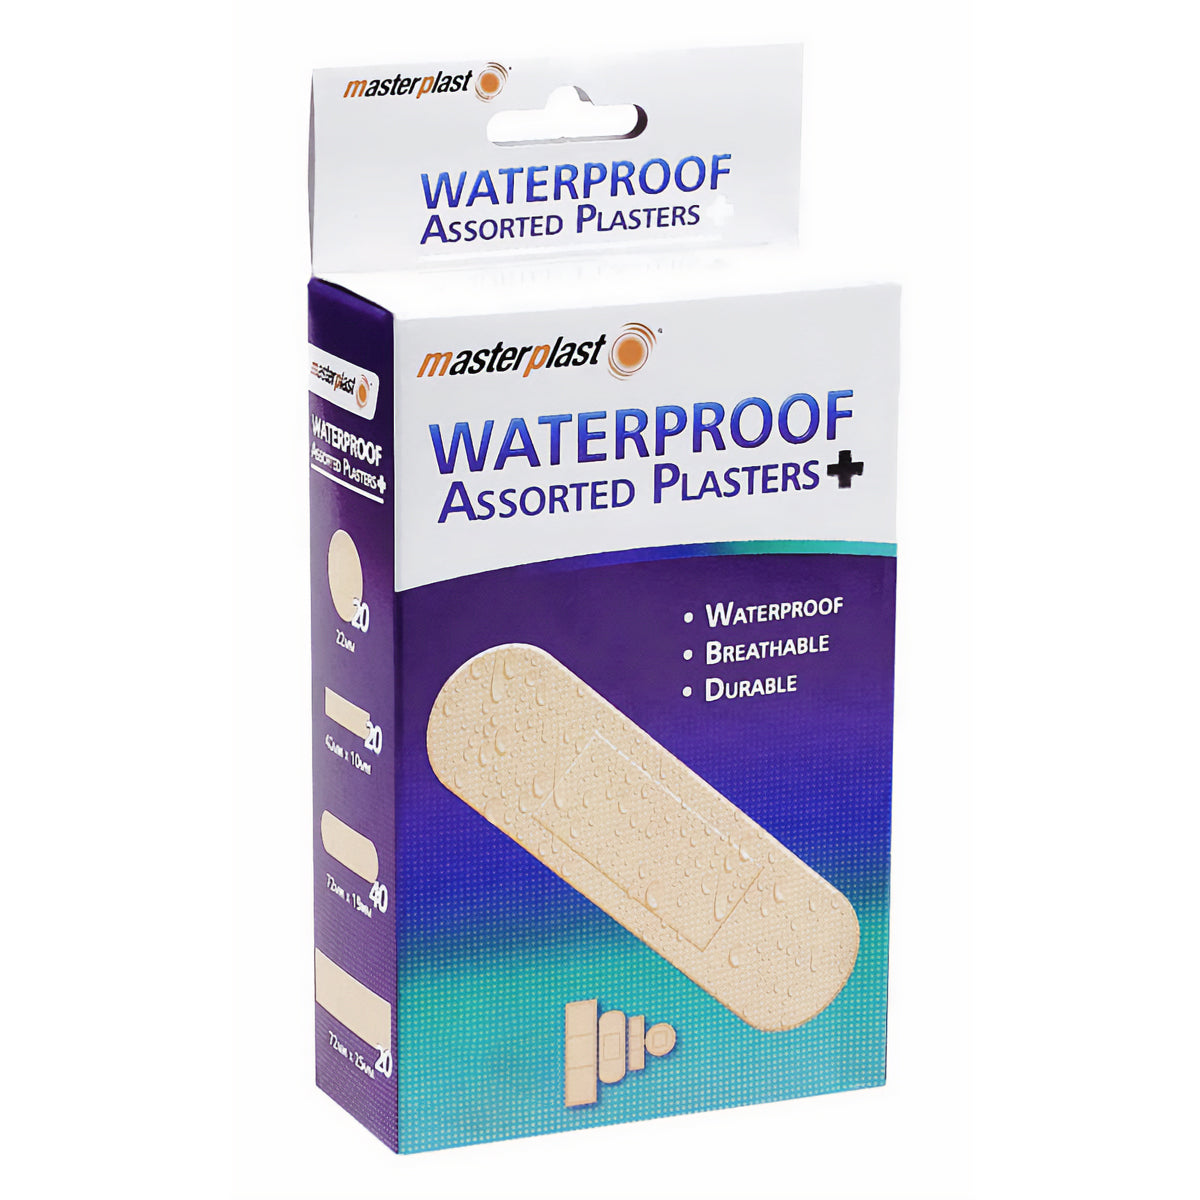 Masterplast - Waterproof Assorted Plasters - 100 Pack - Continental Food Store